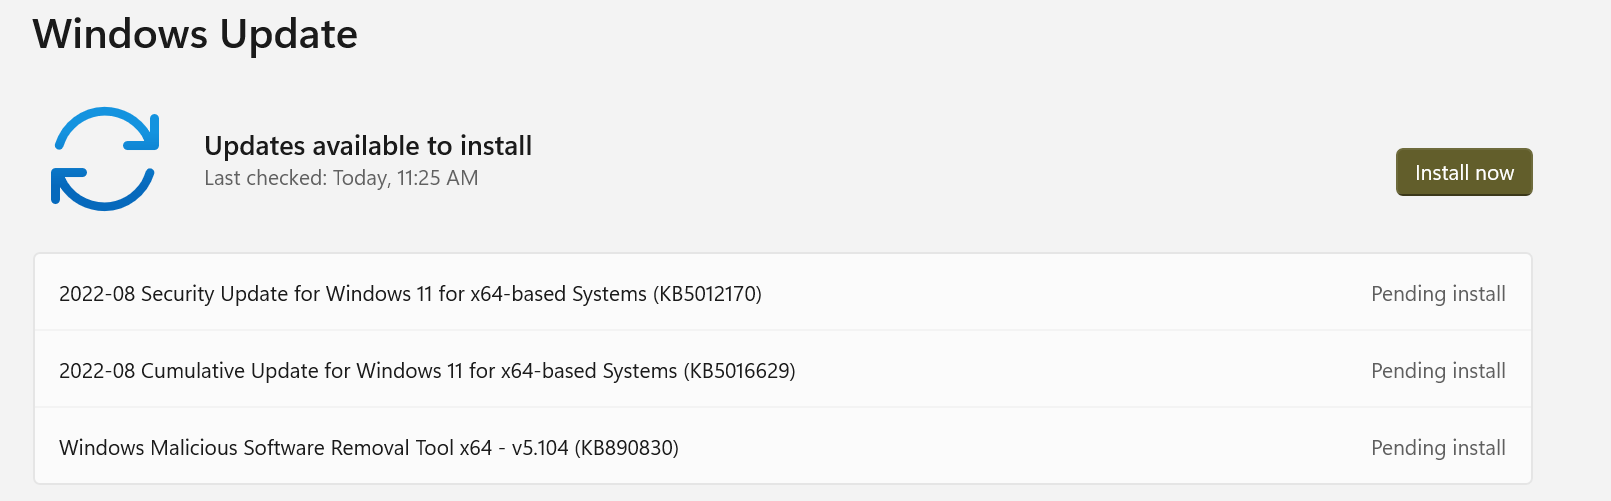 Windows 2022-08 Cumulative Update KB5016629 is stuck on Pending Download 463ca4dc-a99d-4d97-8290-54fcee97e2d2?upload=true.png